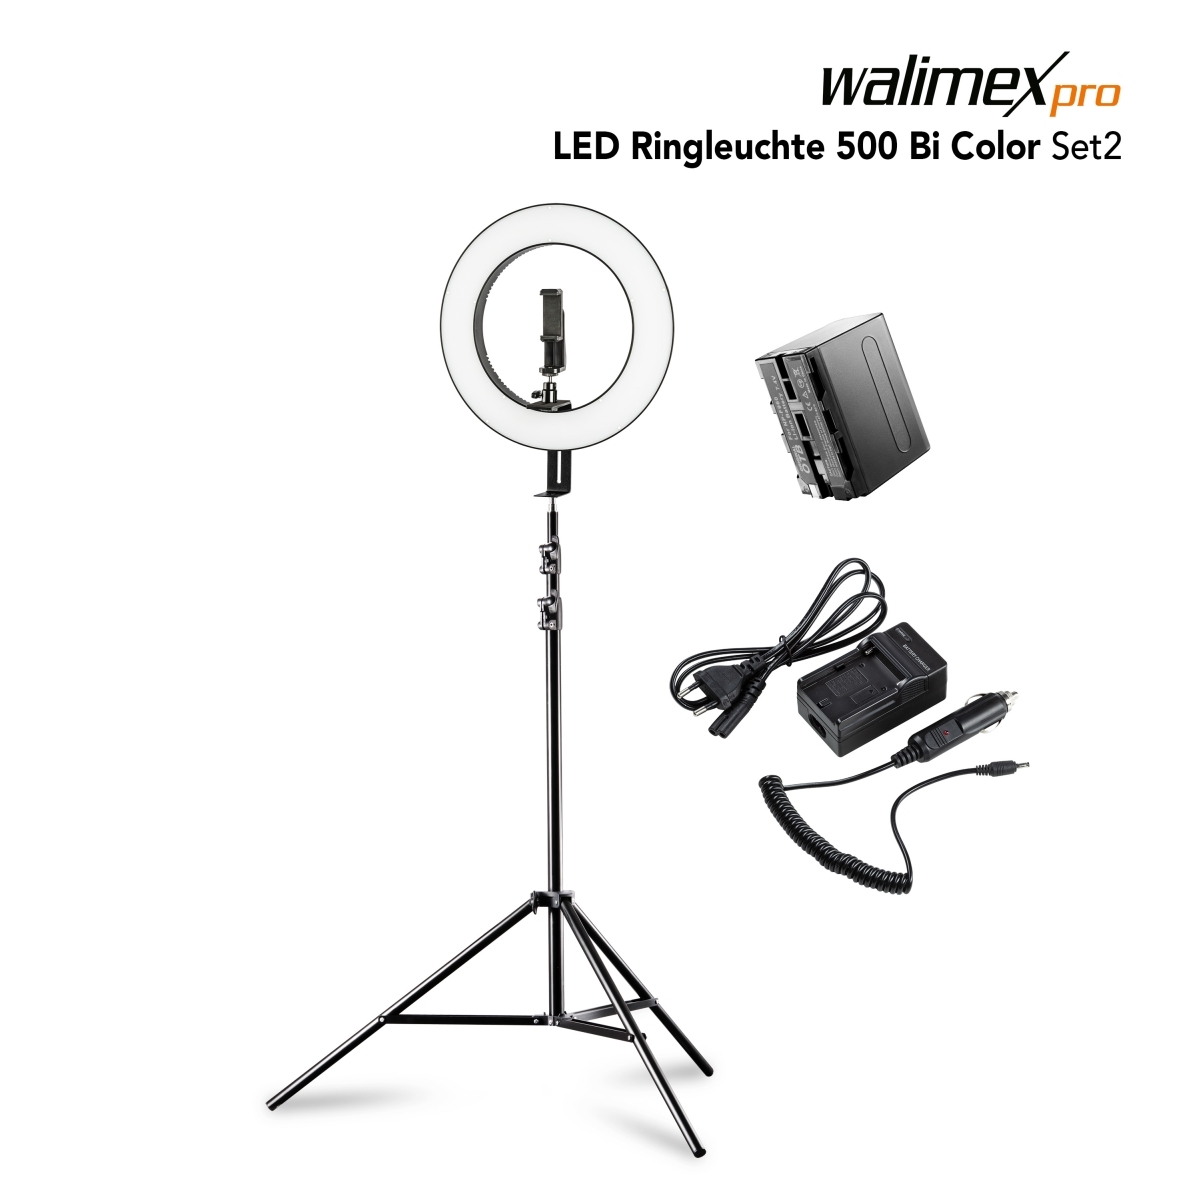 Walimex pro LED Ringleuchte 500 Bi Color Set inkl. Lampenstativ und 2 Akkus